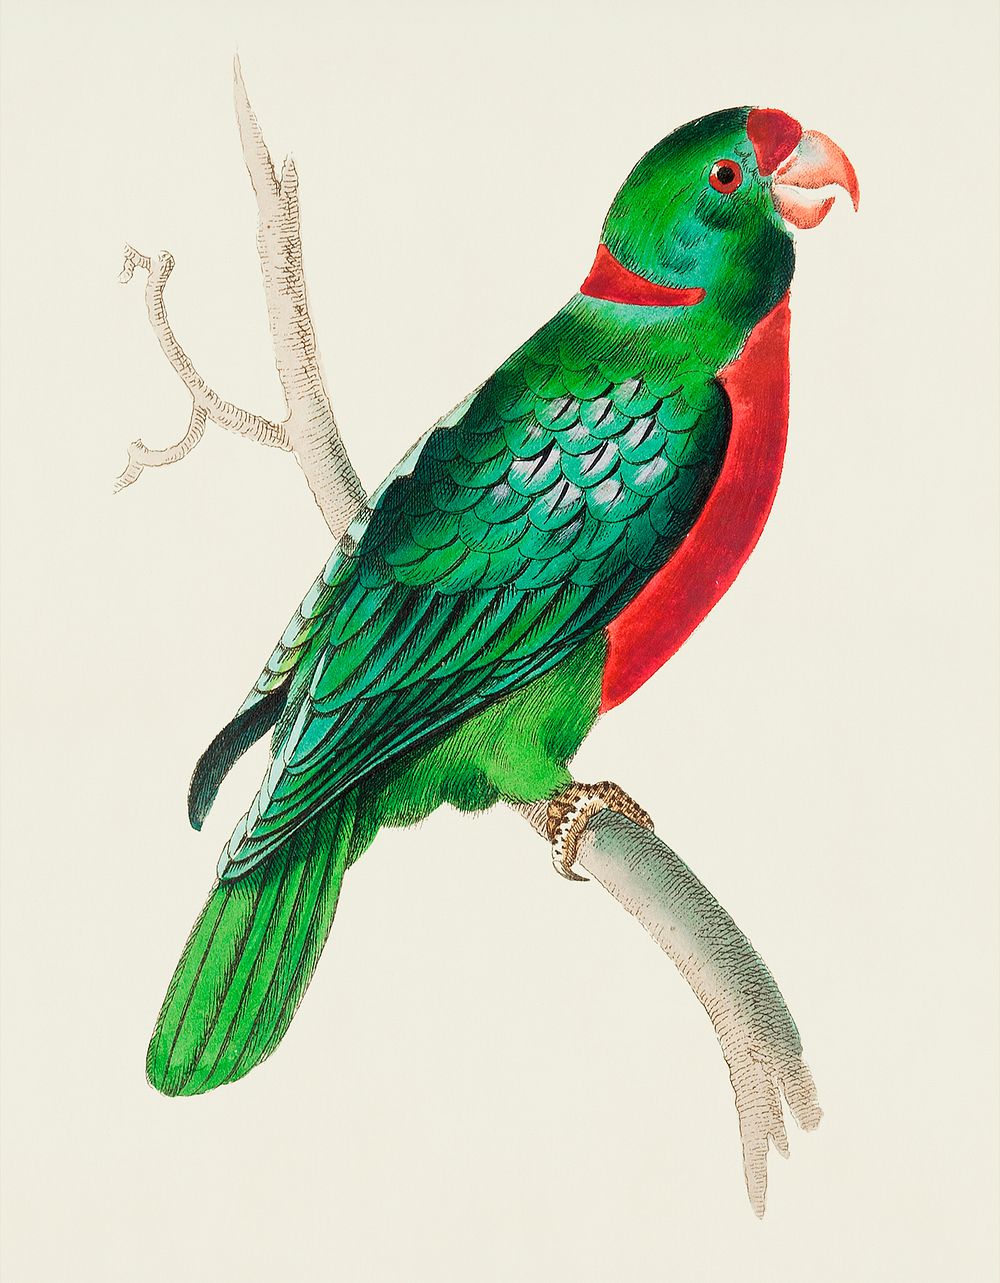 Vintage illustration of Red-naped Parrakeet or Short-tailed green Parrakeet